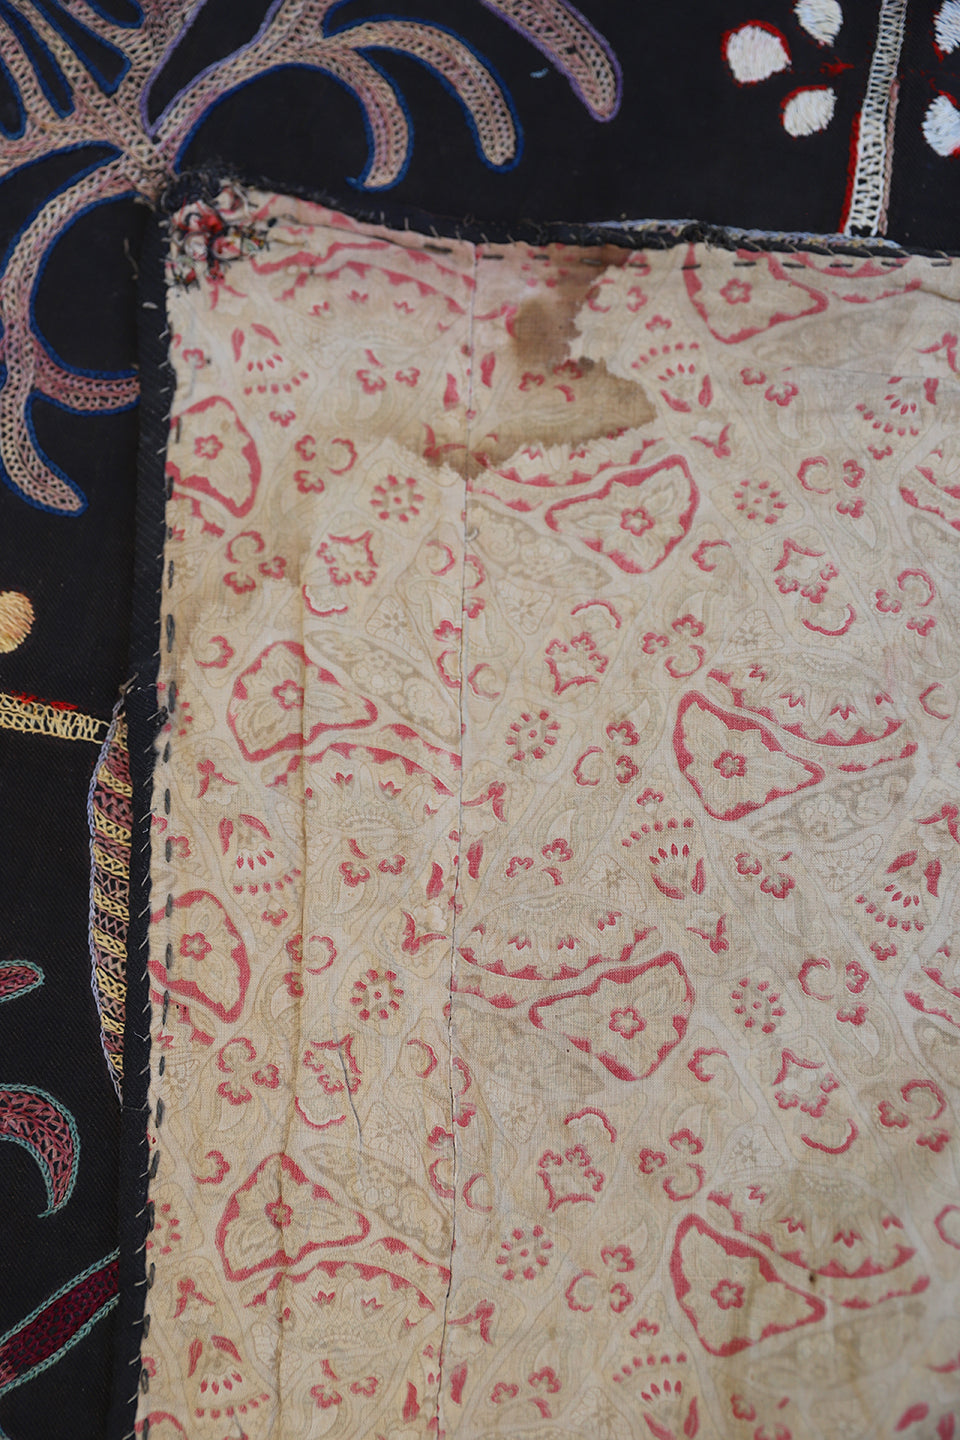 2'6"x2'6" Antique Uzbek Hand Embroidered Suzani Laqai Textile